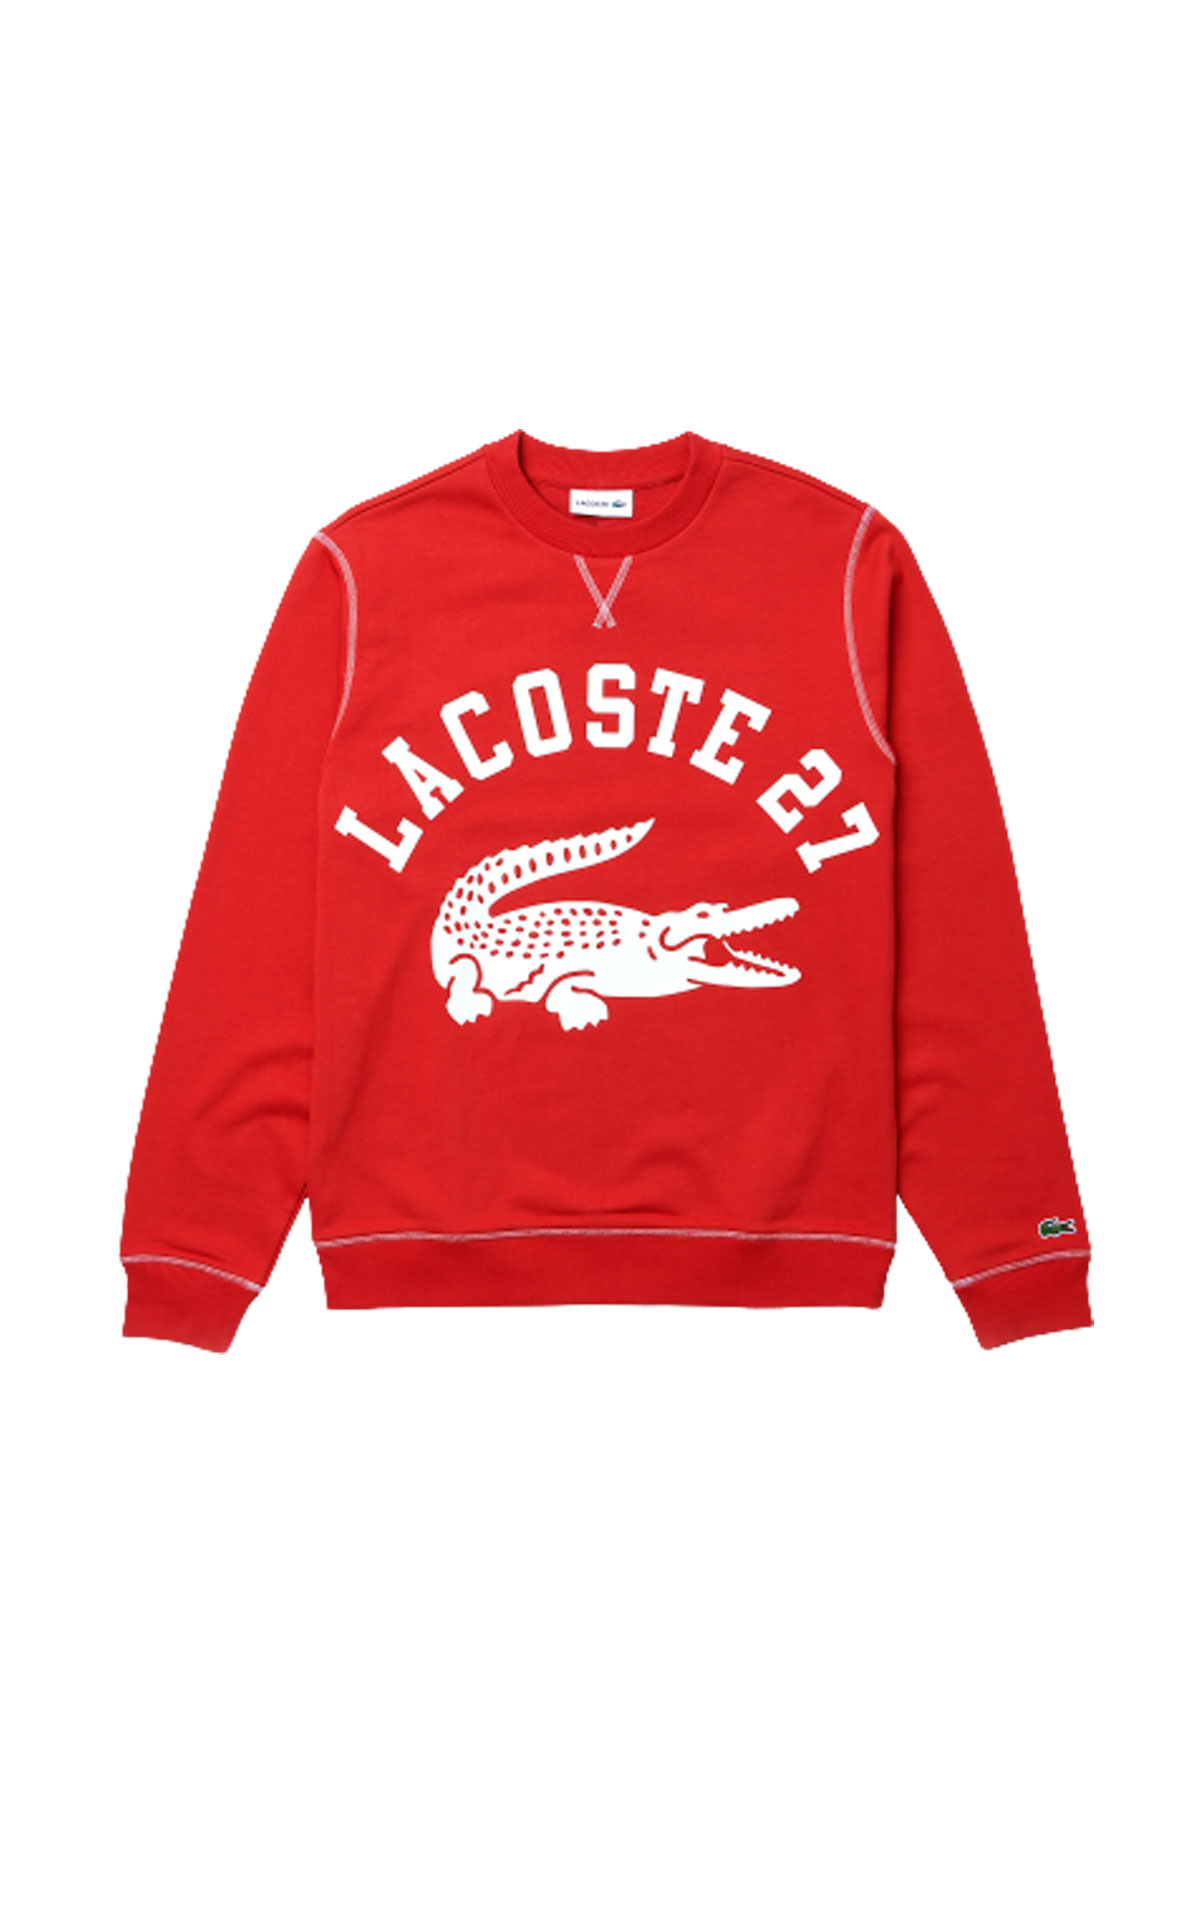 Lacoste 28 print fleece sweatshirt red from Bicester Village